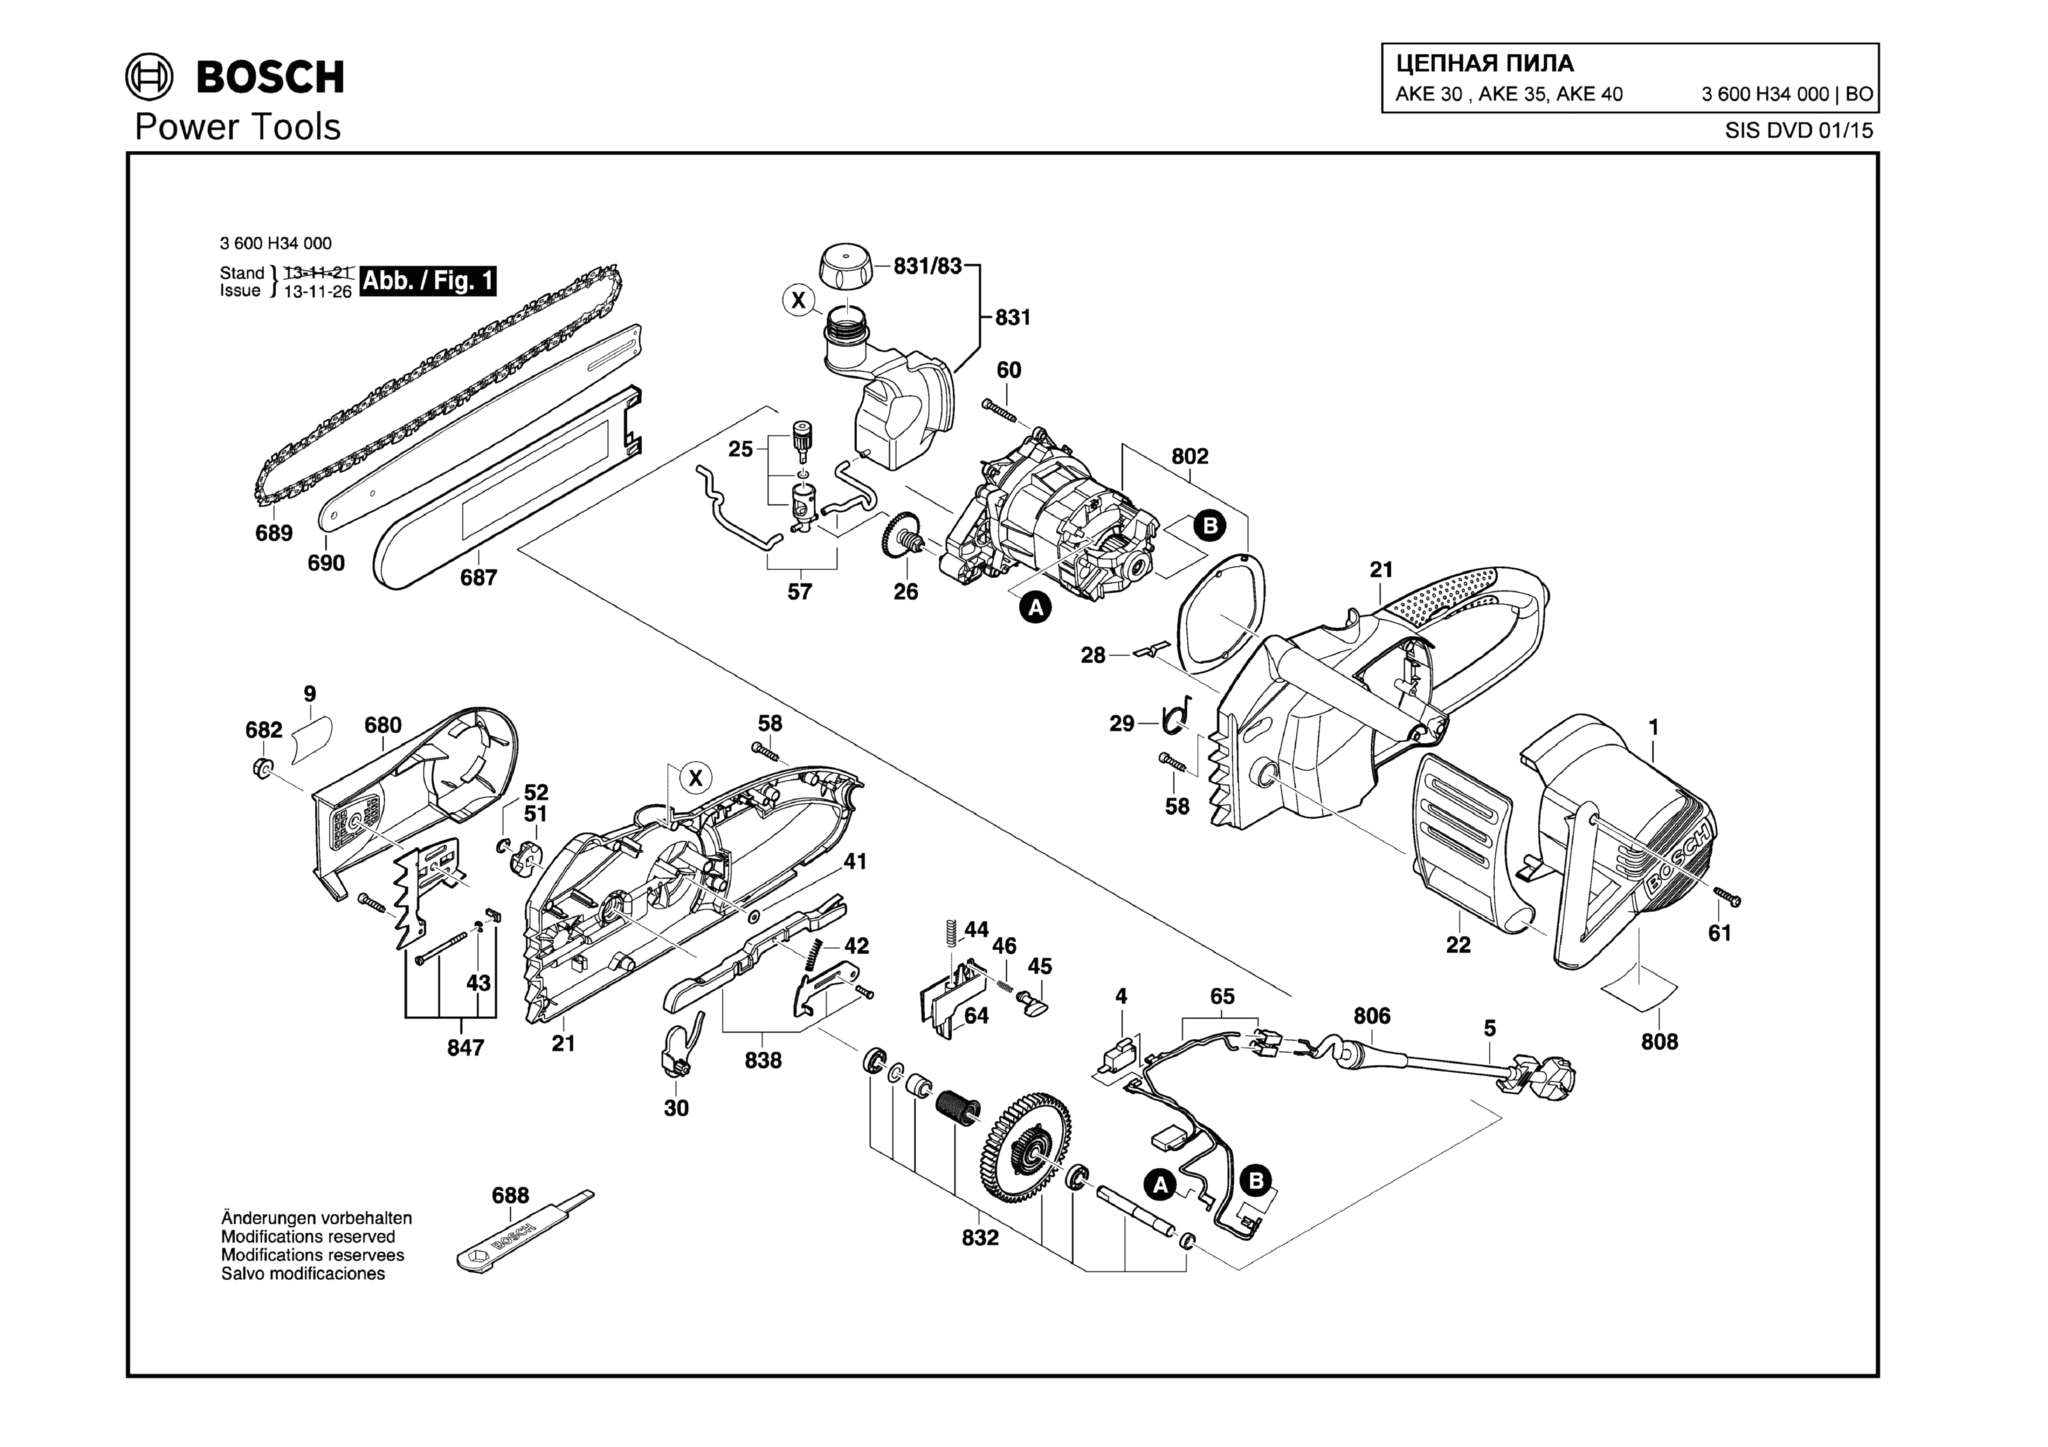 Запчасти, схема и деталировка Bosch AKE 30 , AKE 35, AKE (ТИП 3600H34000)